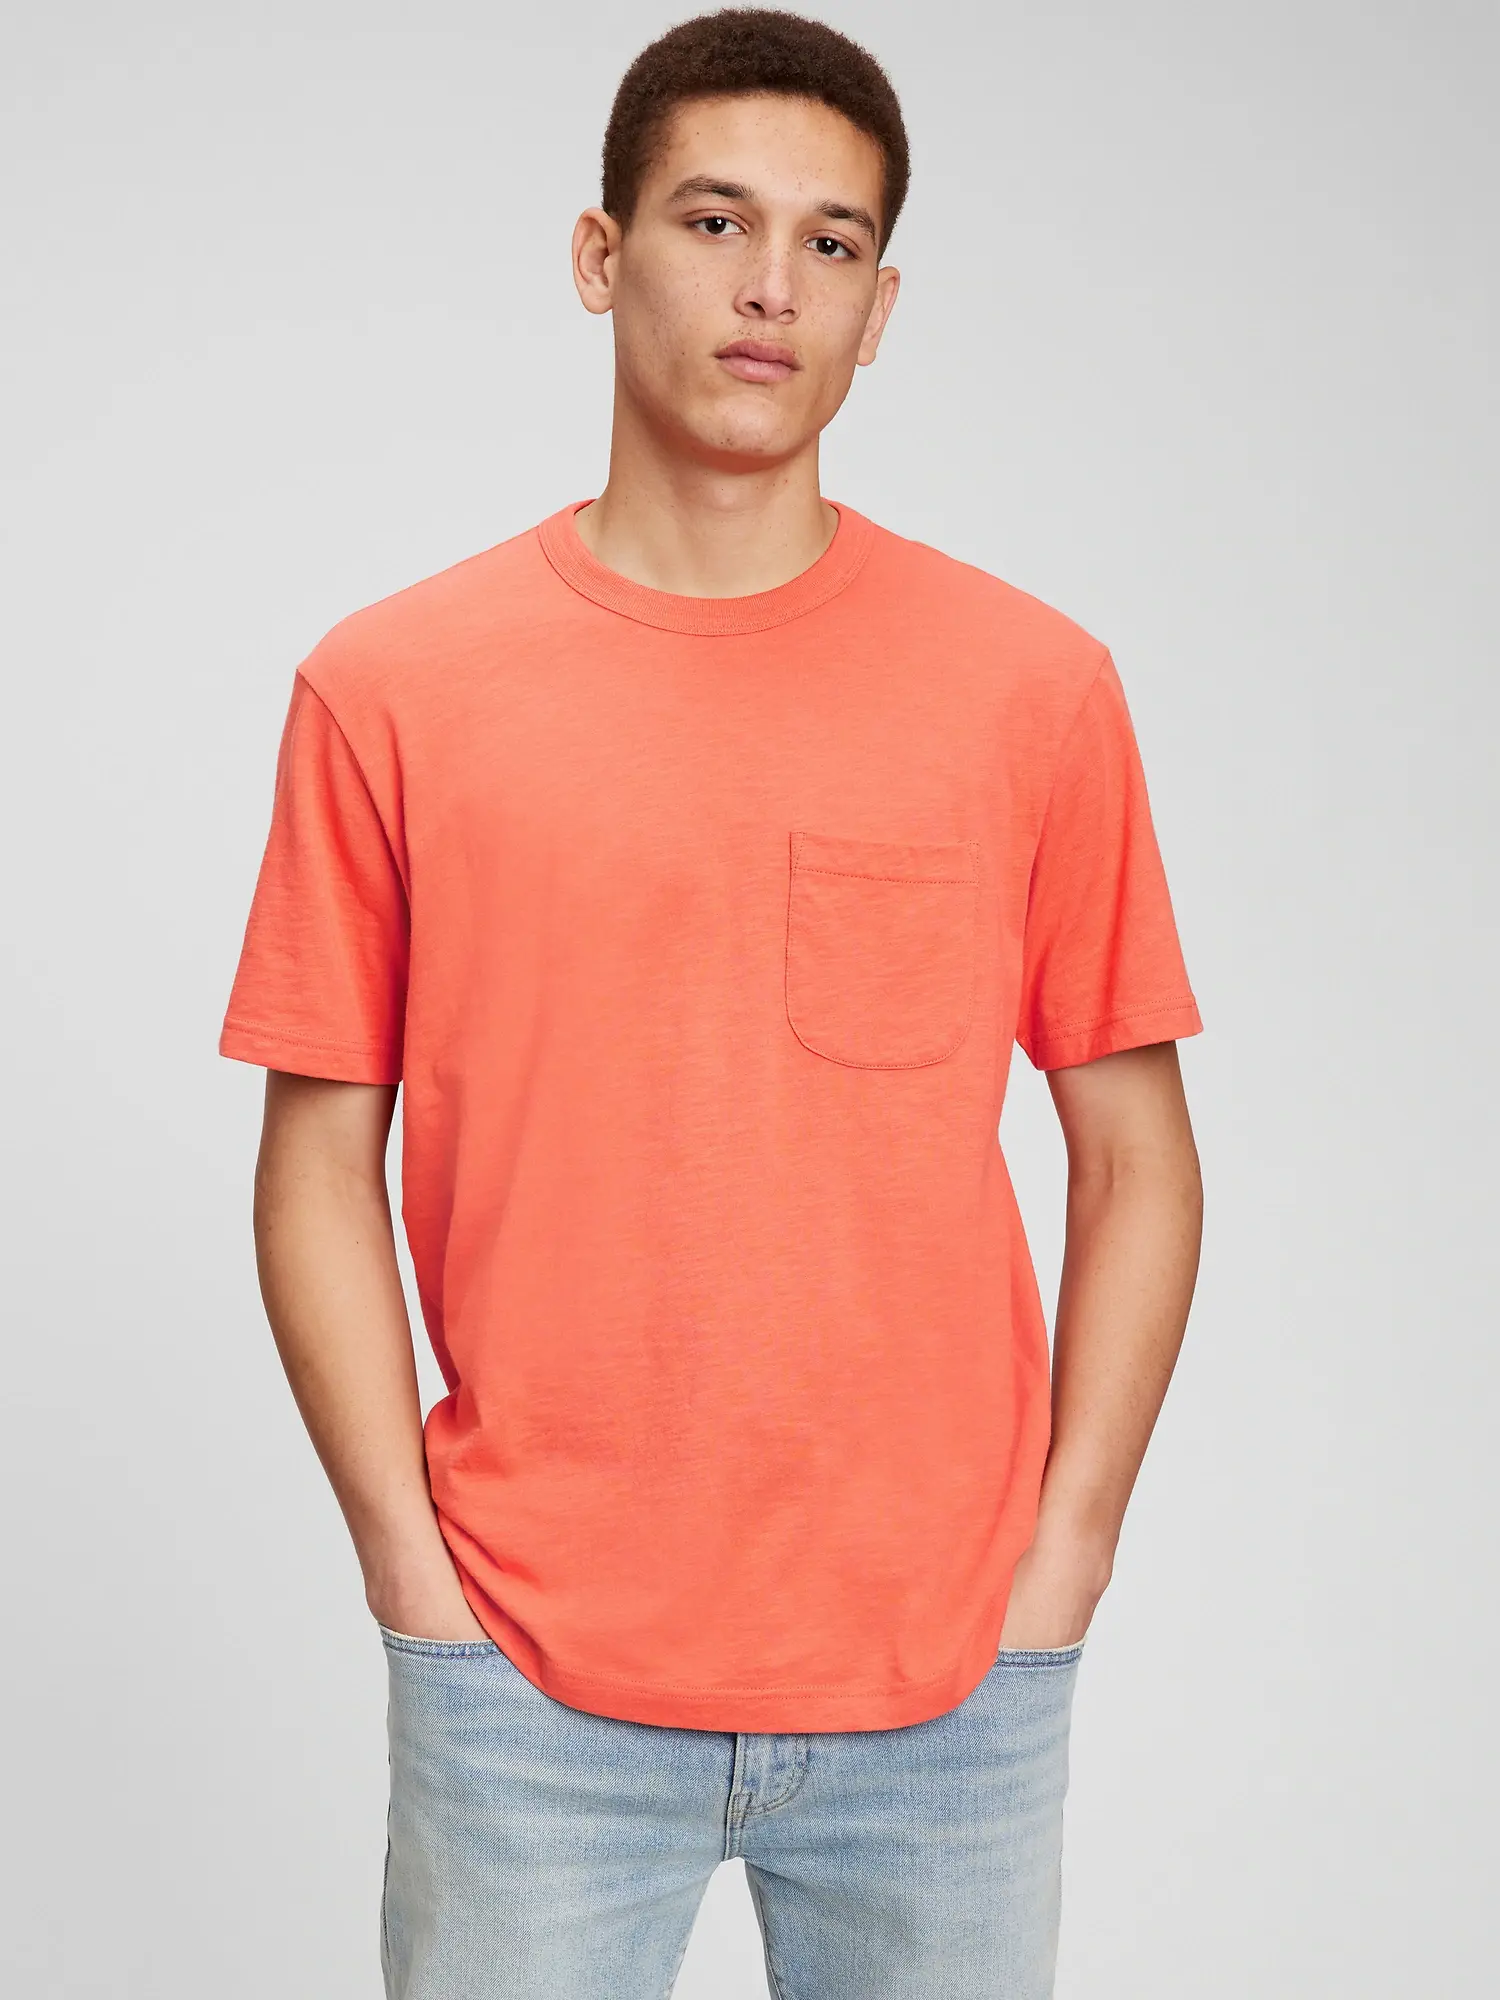 Gap Classic Fit Slub Pocket T-Shirt orange. 1